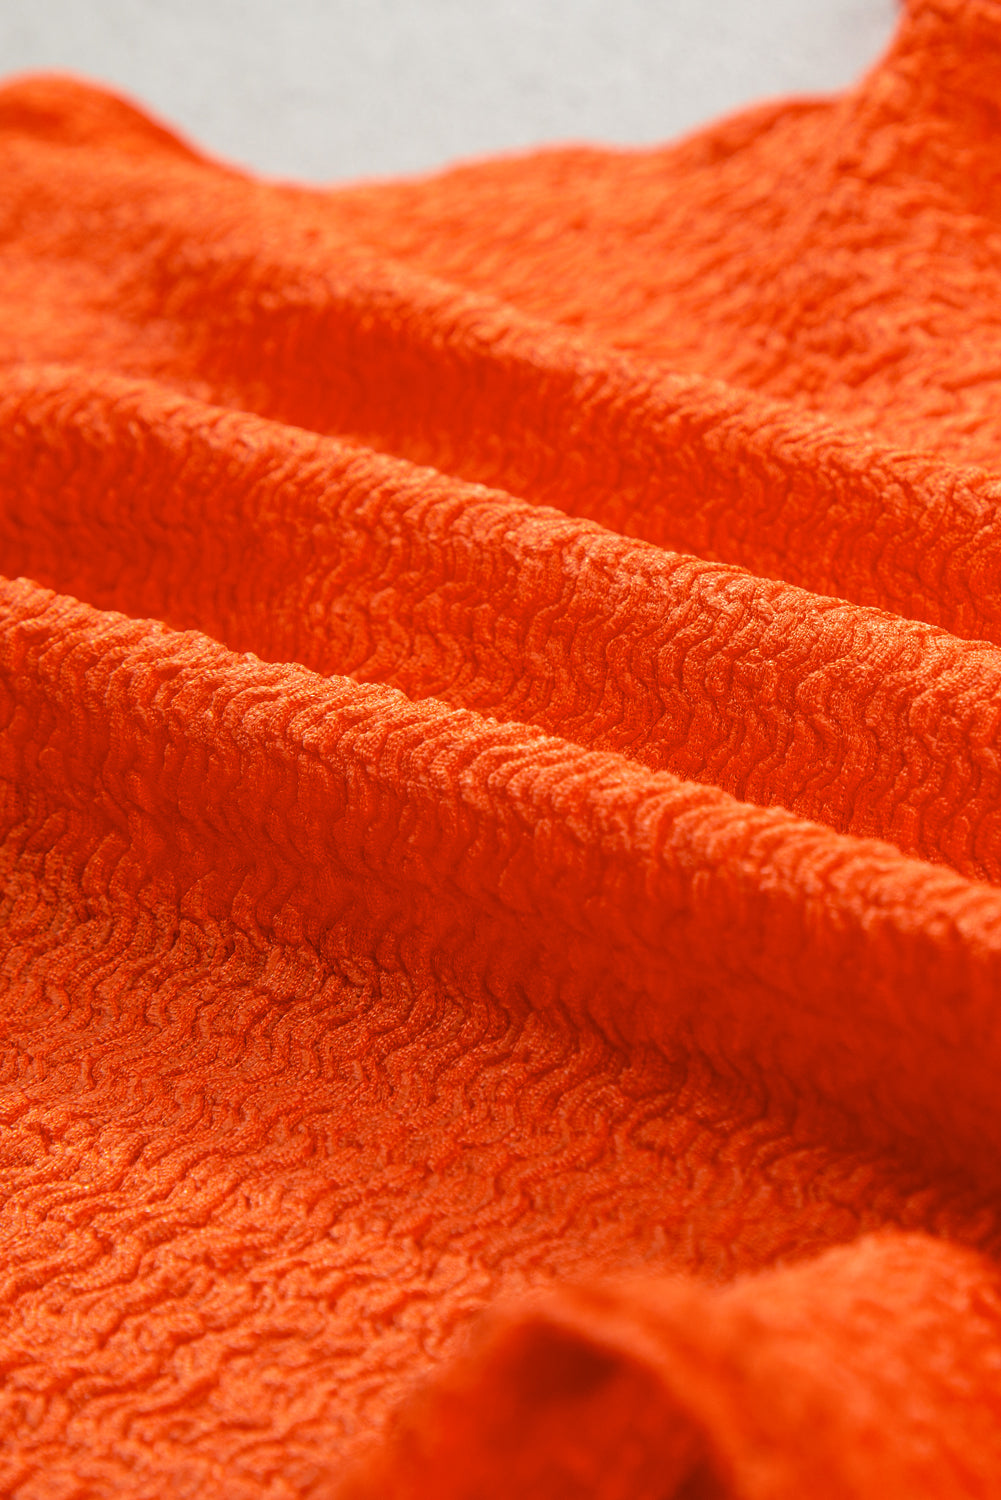 Orange Textured Tassel Hem Cropped Cami Top